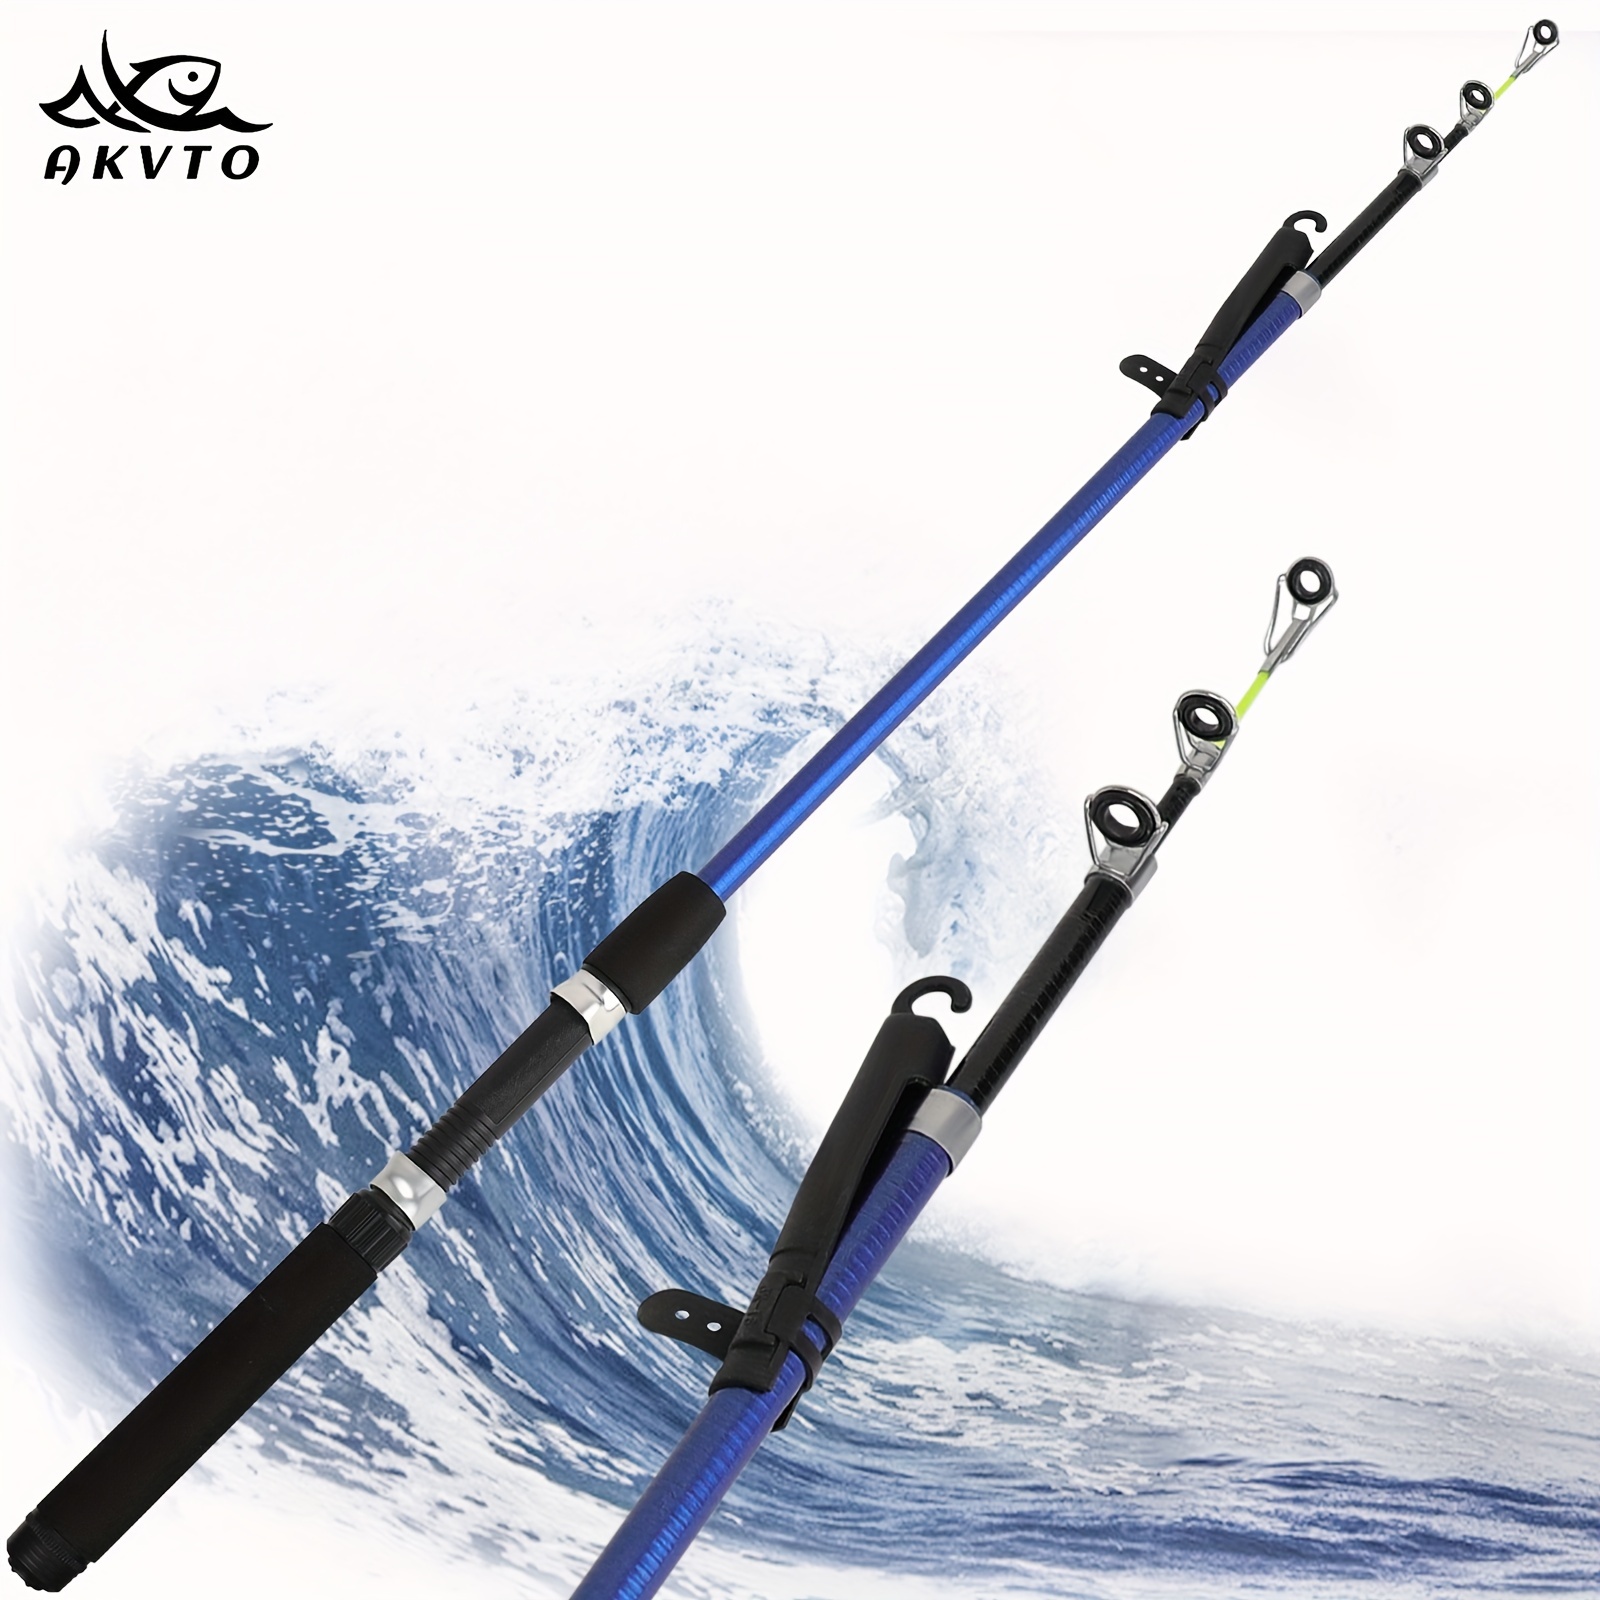 

Akvto Portable Telescopic Fishing Rod - Lightweight, Durable Fiberglass For Freshwater & Saltwater Angling, 5.91ft Extendable Telescopic Fishing Rod Combo Saltwater Fishing Rod And Reel